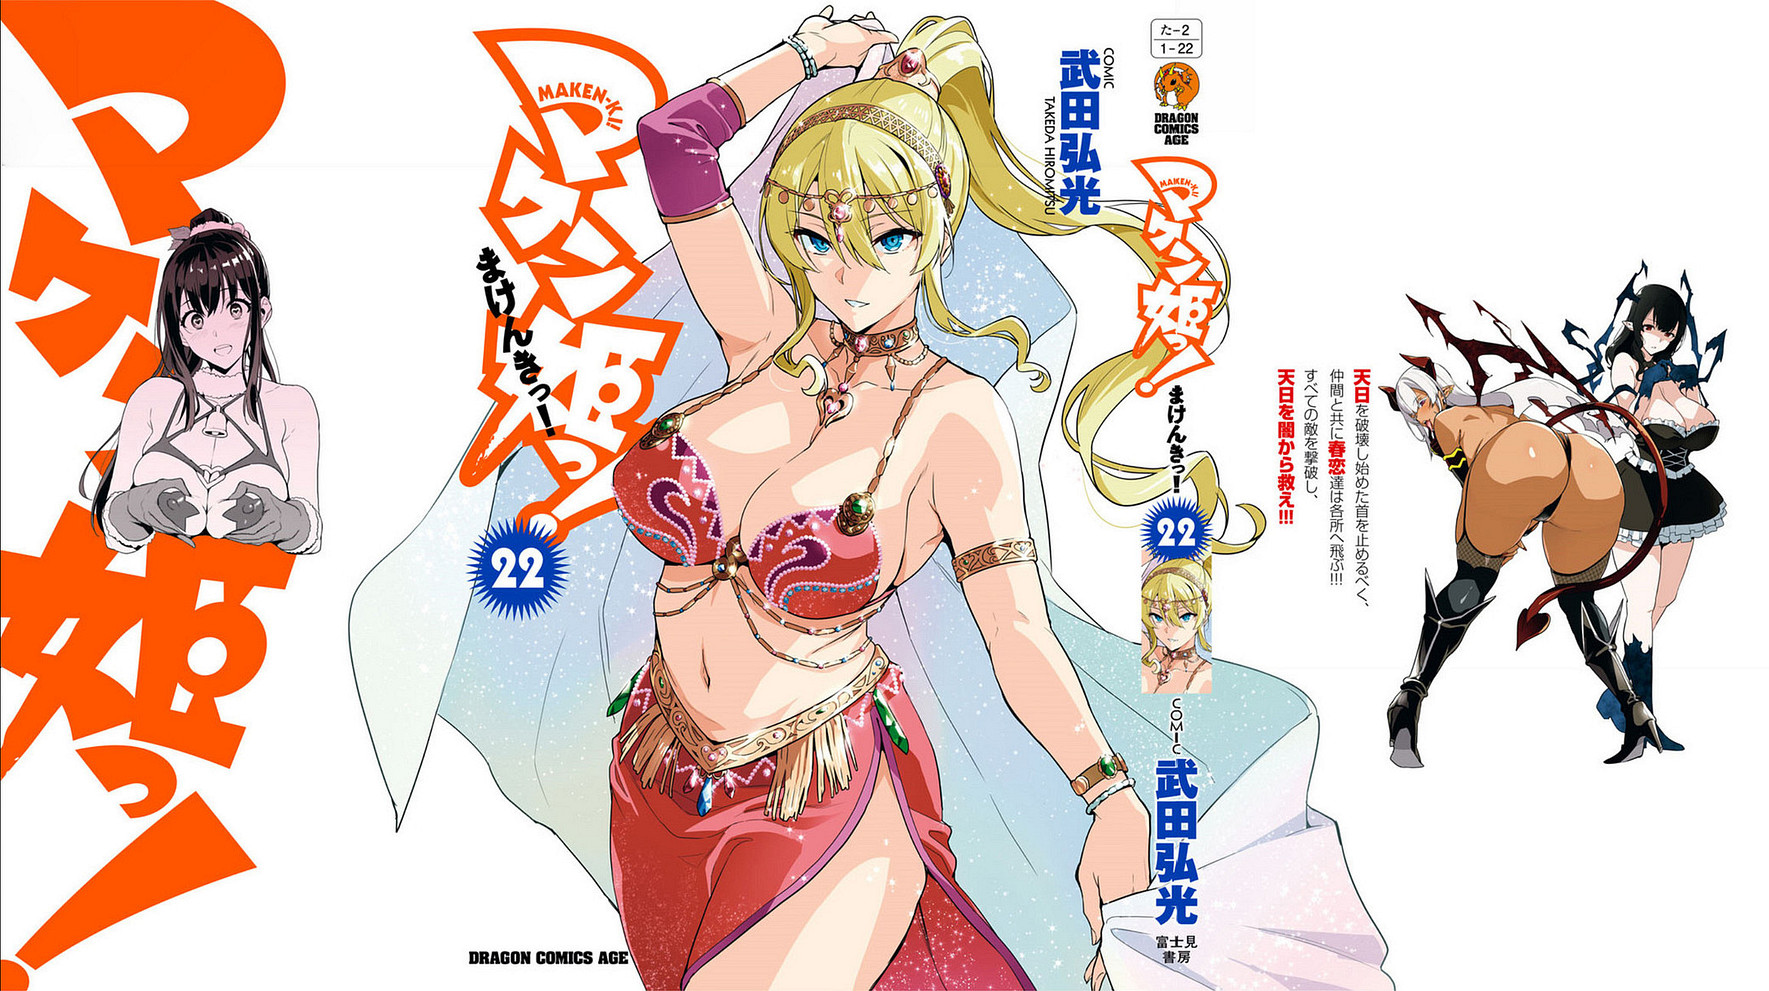 Return to Maken-Ki! manga fanservice compilation. 